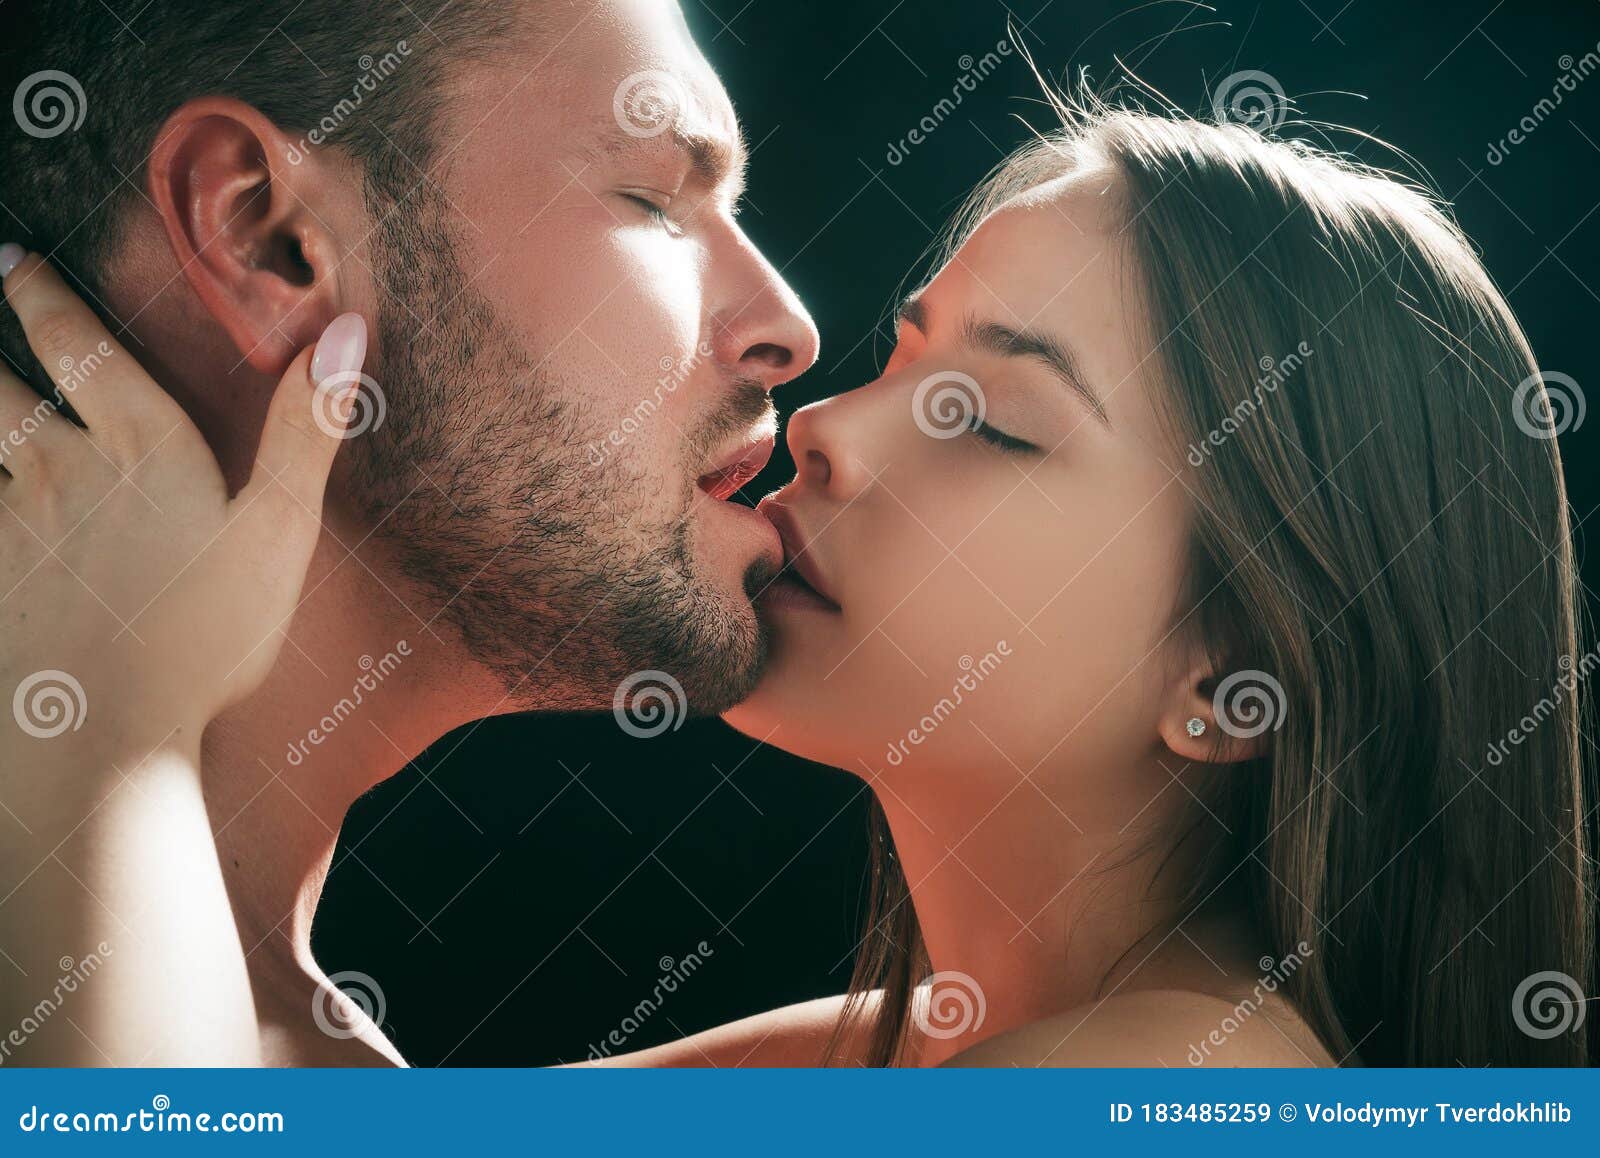 Romantic tongue kiss